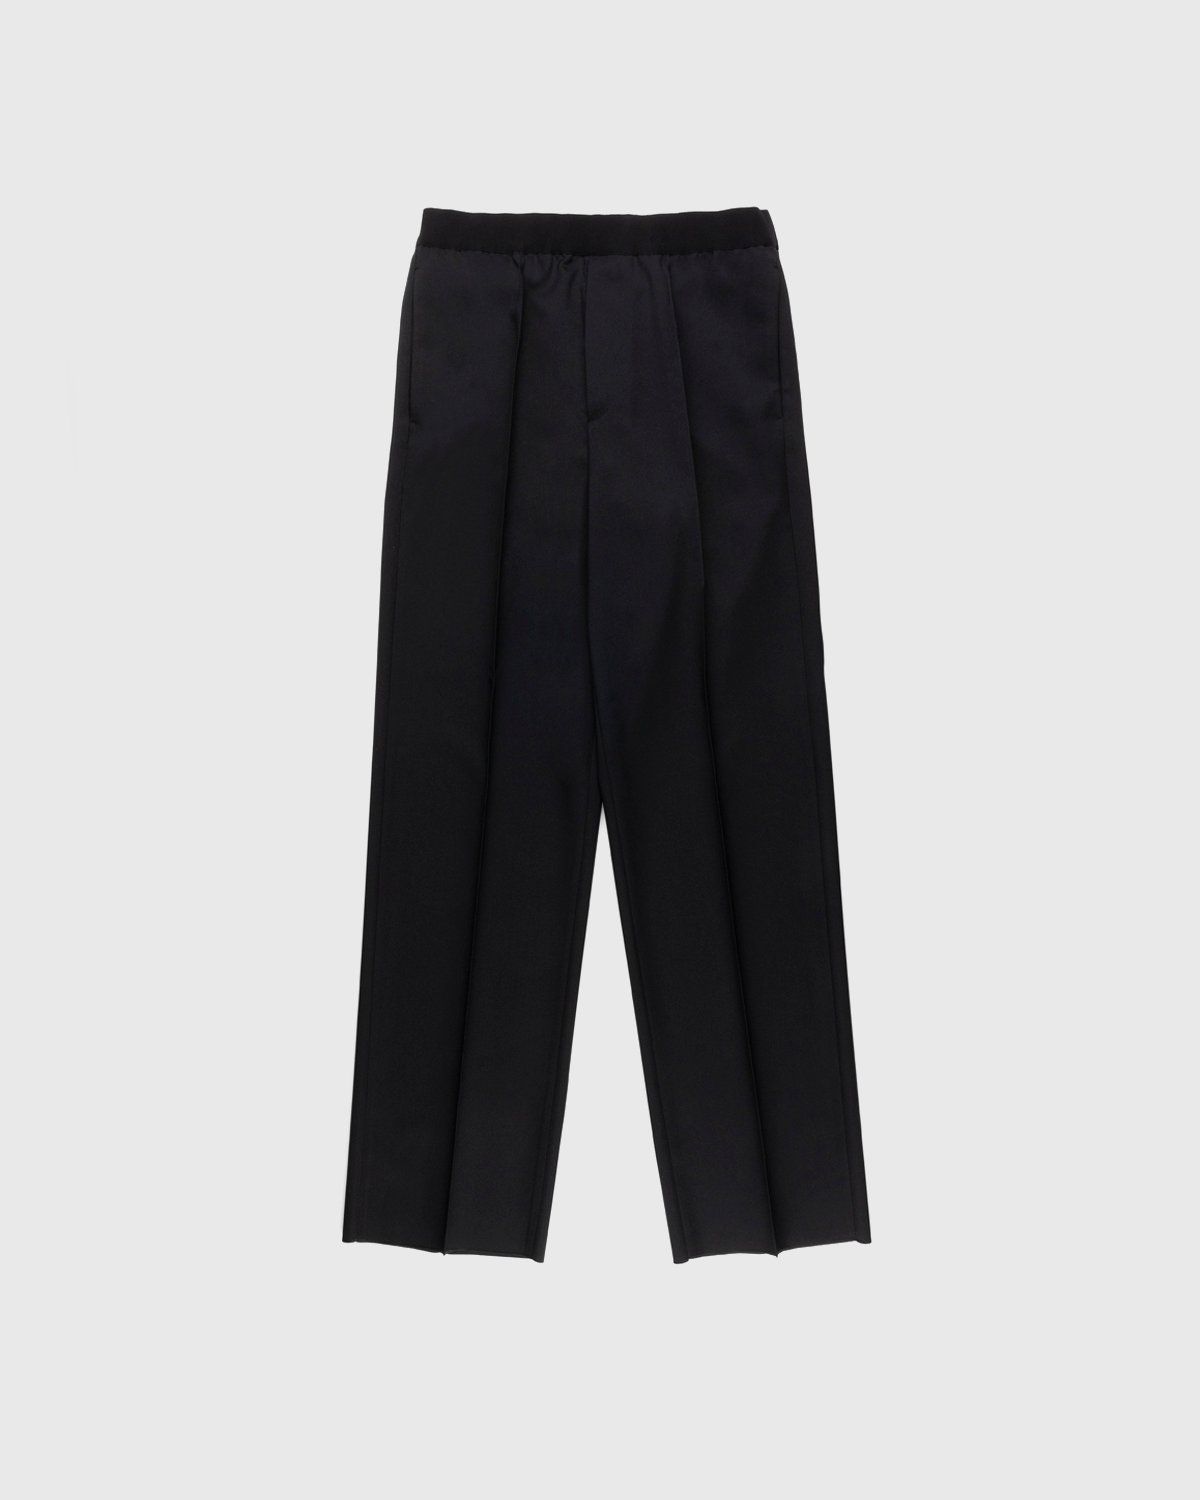 Jil Sander – Polyester Trousers Black - Trousers - Black - Image 1